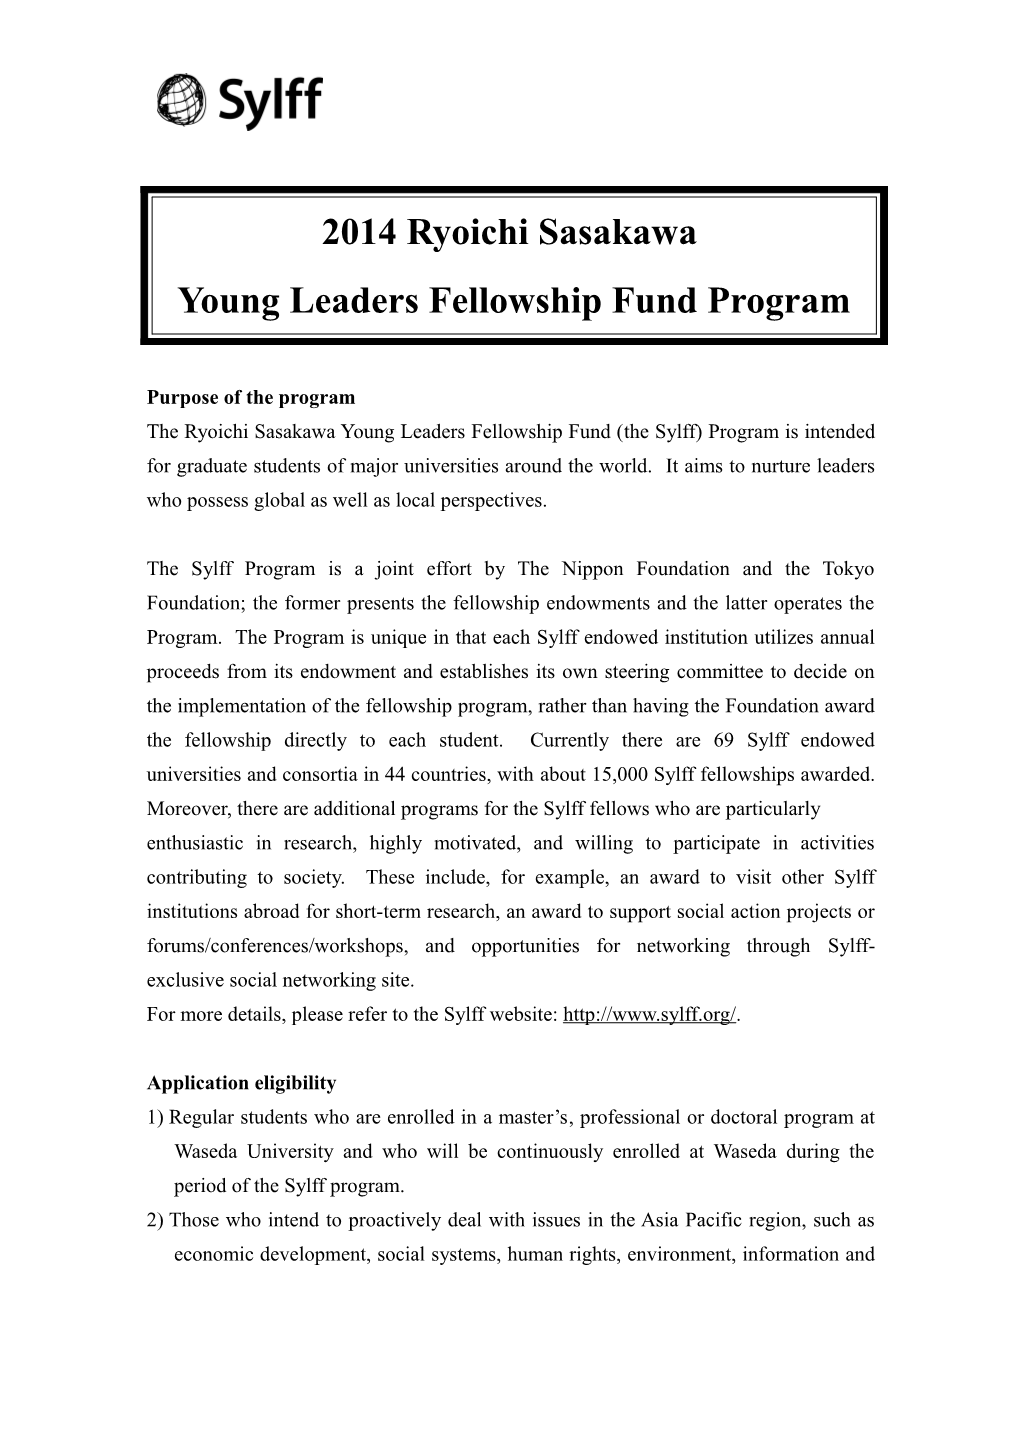 The Ryoichi Sasakawa Young Leaders Fellowship Fund Program 2010 Application